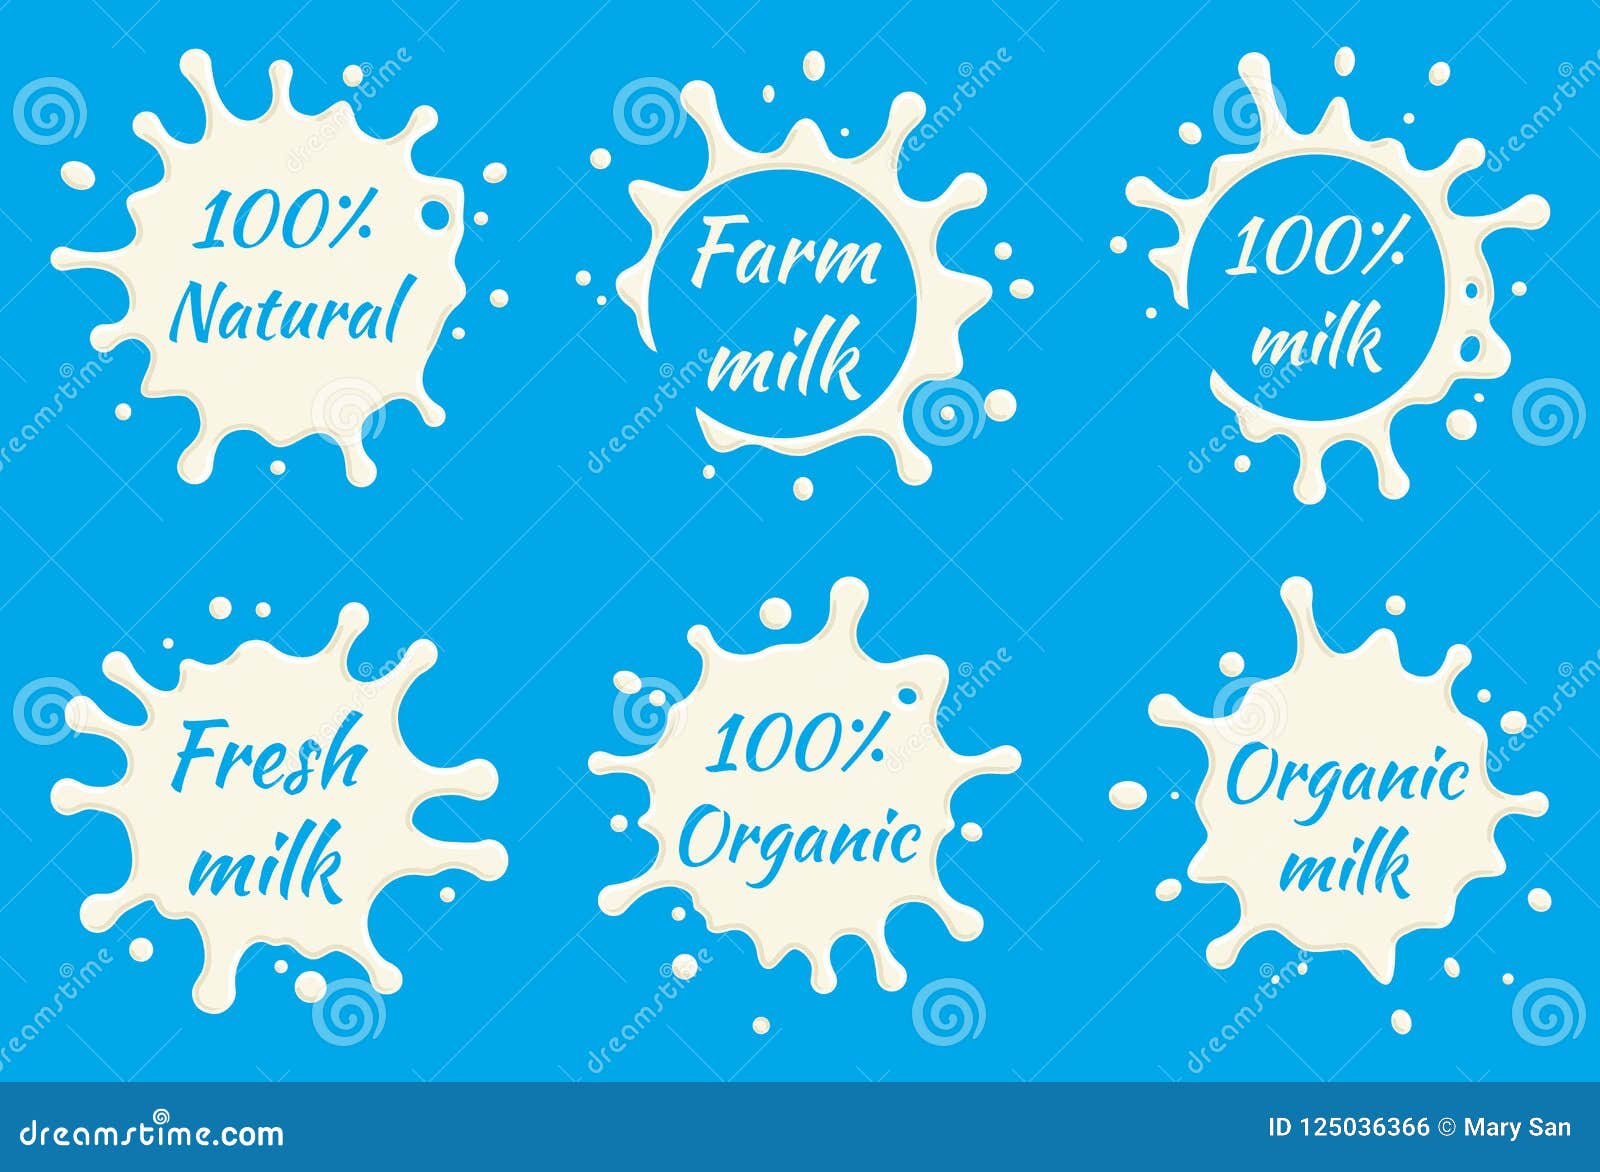 Dairy Logo Stock Illustrations, Royalty-Free Vector Graphics & Clip Art -  iStock | Milk logo, Farm label